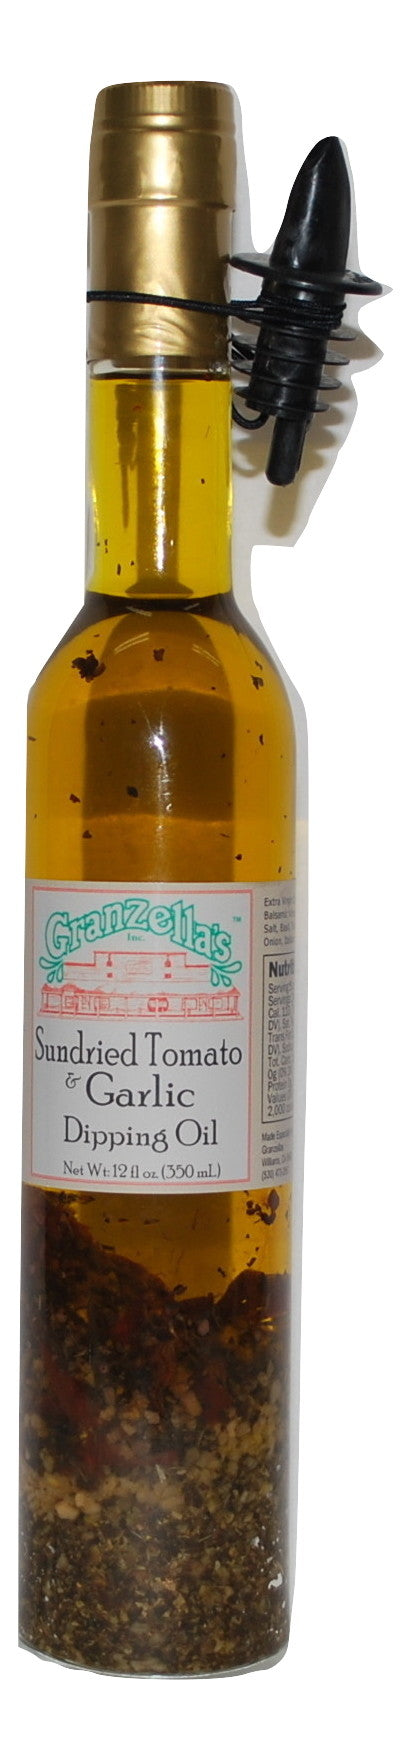 Sundried Tomato & Garlic Dipping oil